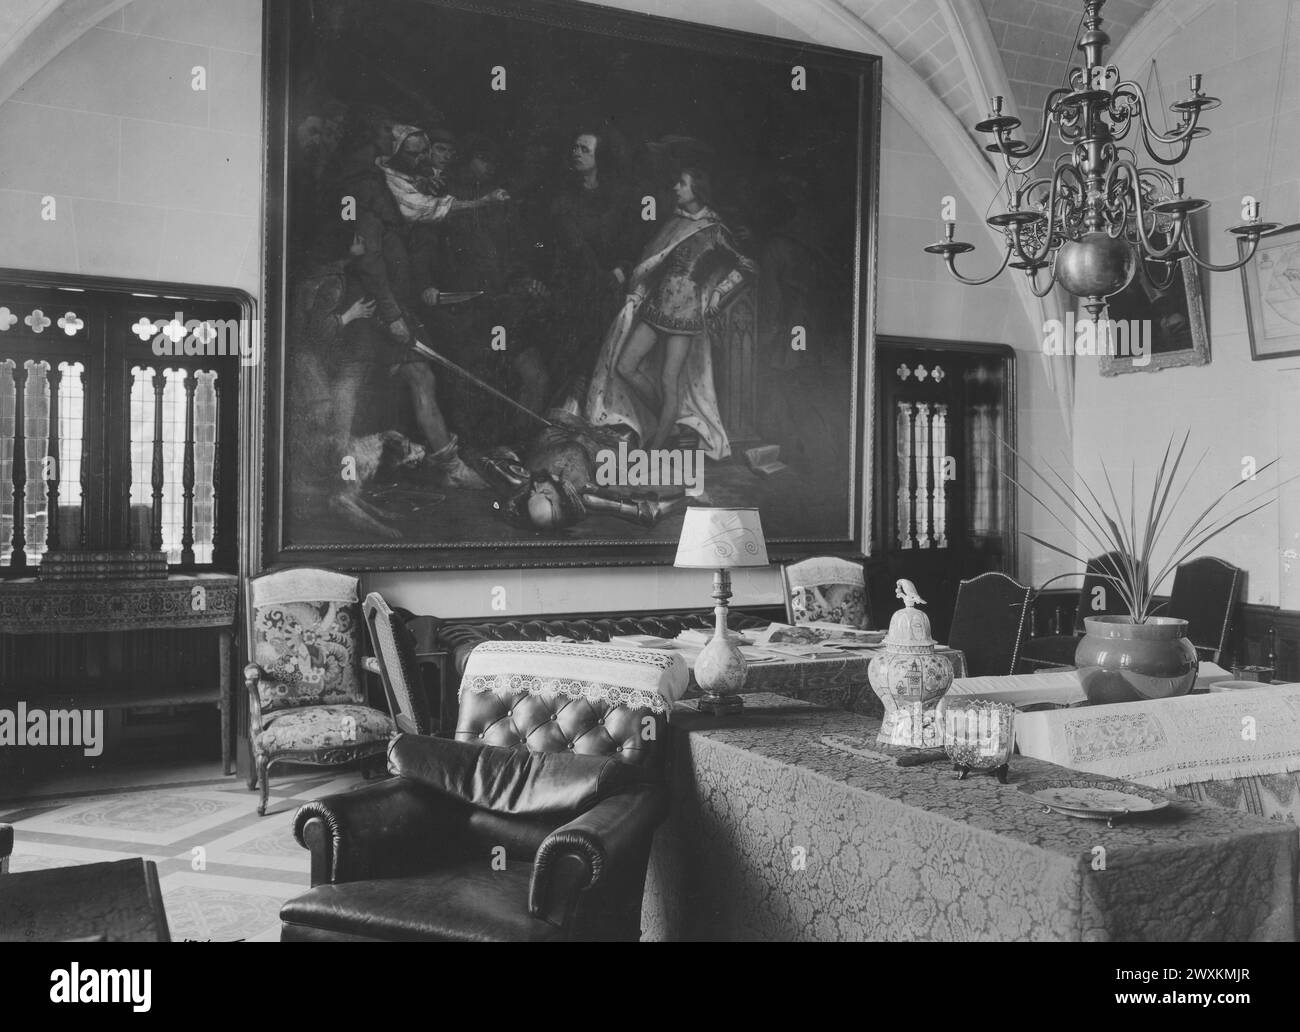 Interior de la sala de lectura en el castillo general John J. Pershing en Val des Ecolier cerca de Chaumont Francia ca. 1918 Foto de stock